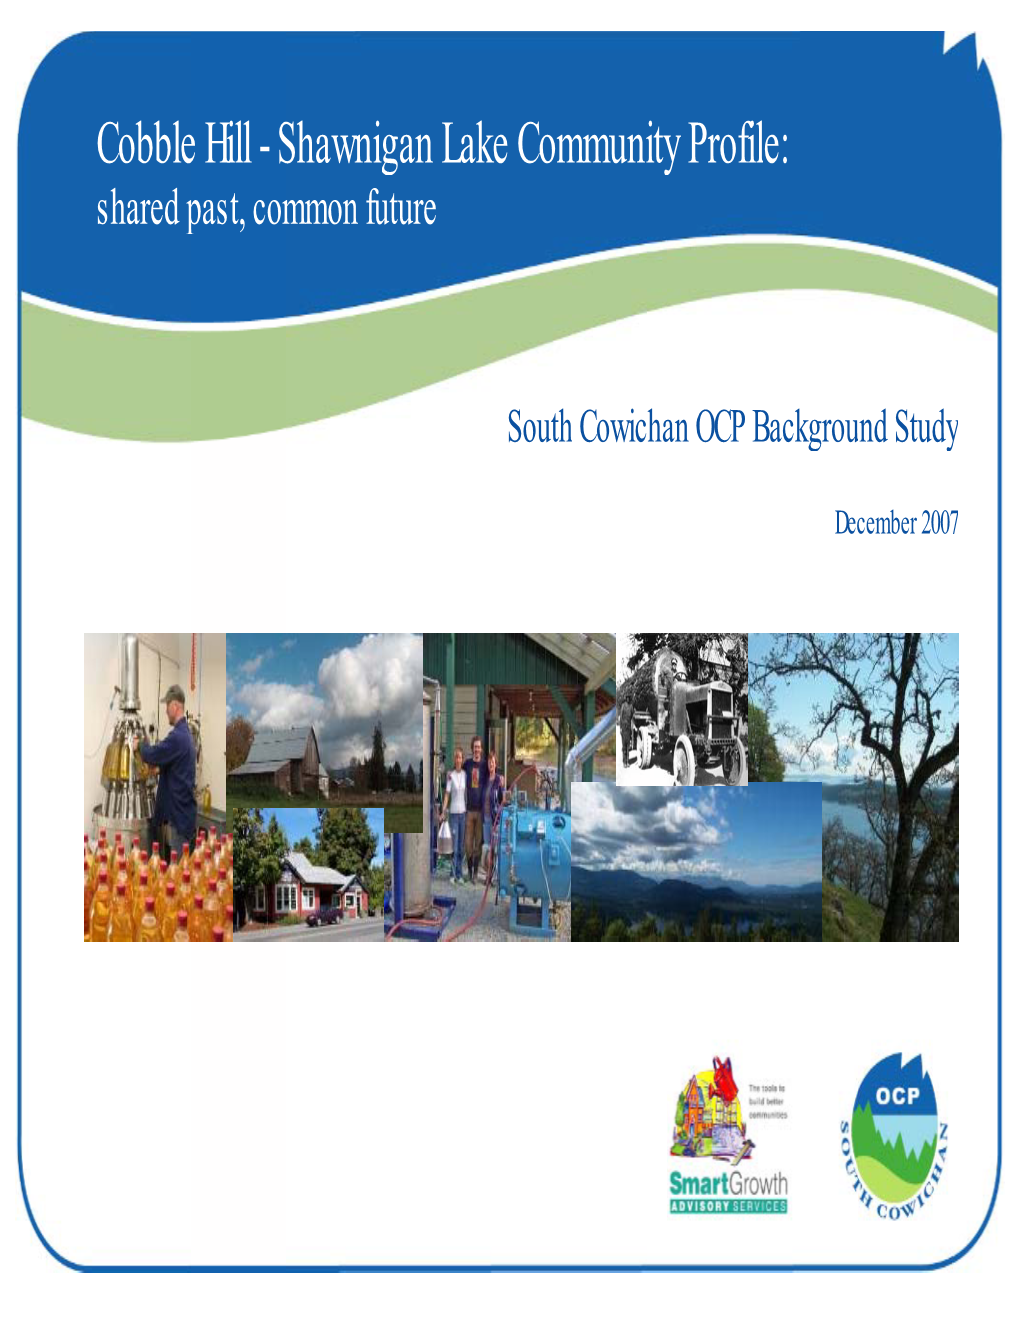 Cobble Hill - Shawnigan Lake Community Profile: Shared Past, Common Future